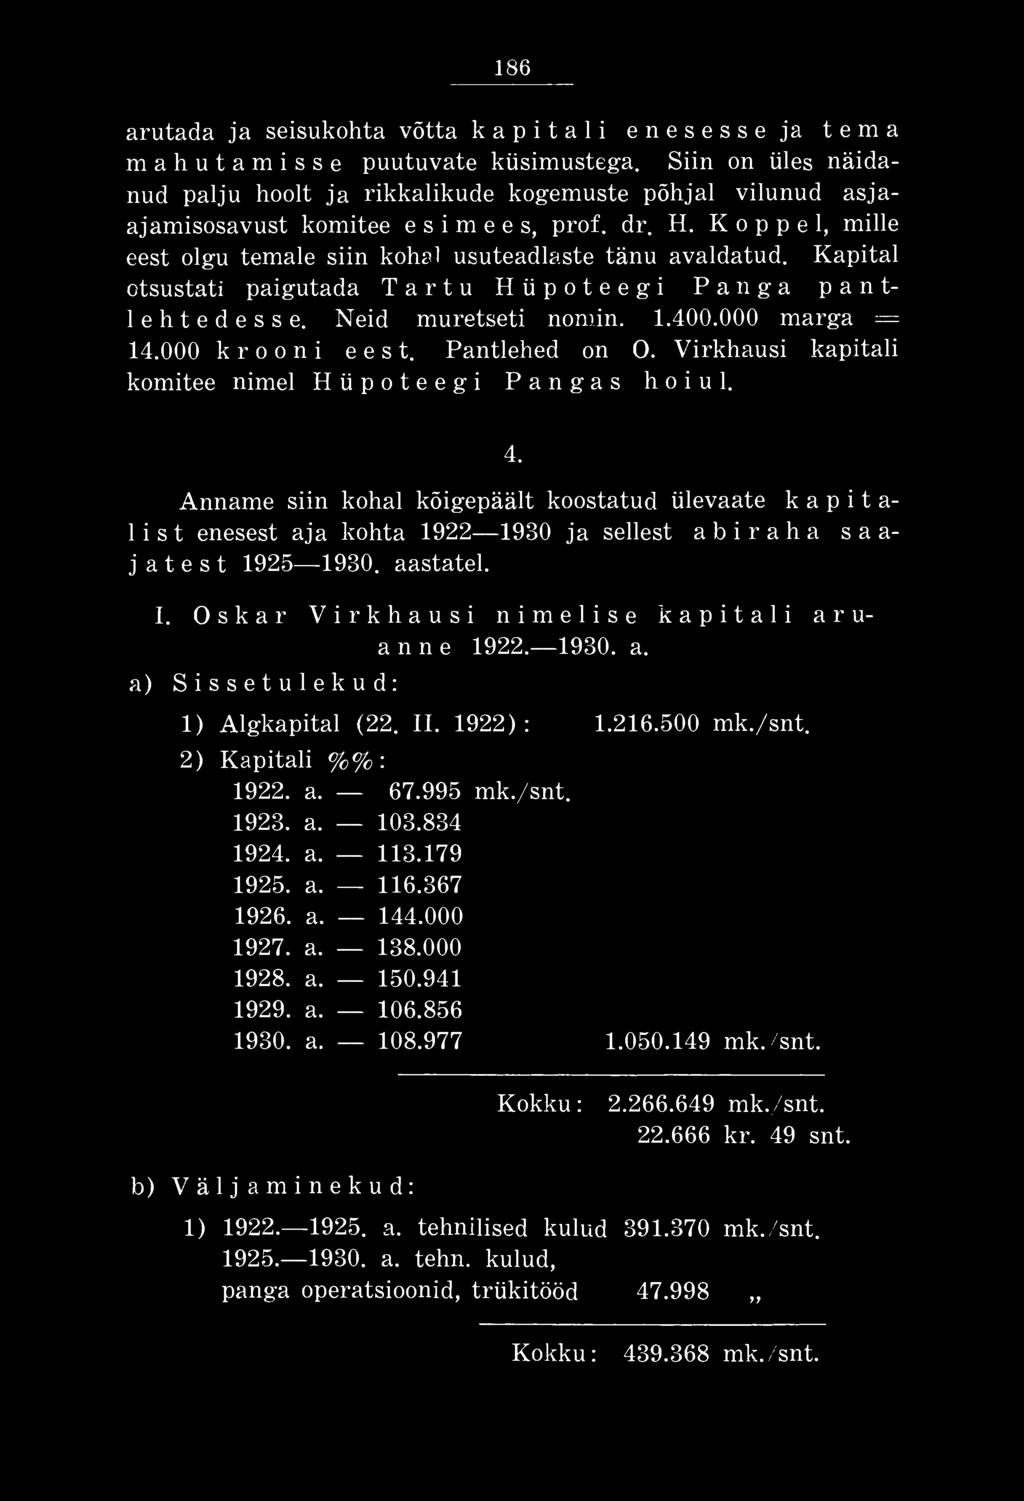 aastatel. I. Oskar Virkhausi nimelise kapitali aruanne 1922. 1930. a. a) Sissetulekud: 1) Algkapital (22. II. 1922): 1.216.500 mk./snt. 2) Kapitali %%: 1922. a. 67.995 mk./snt. 1923. a. 103.